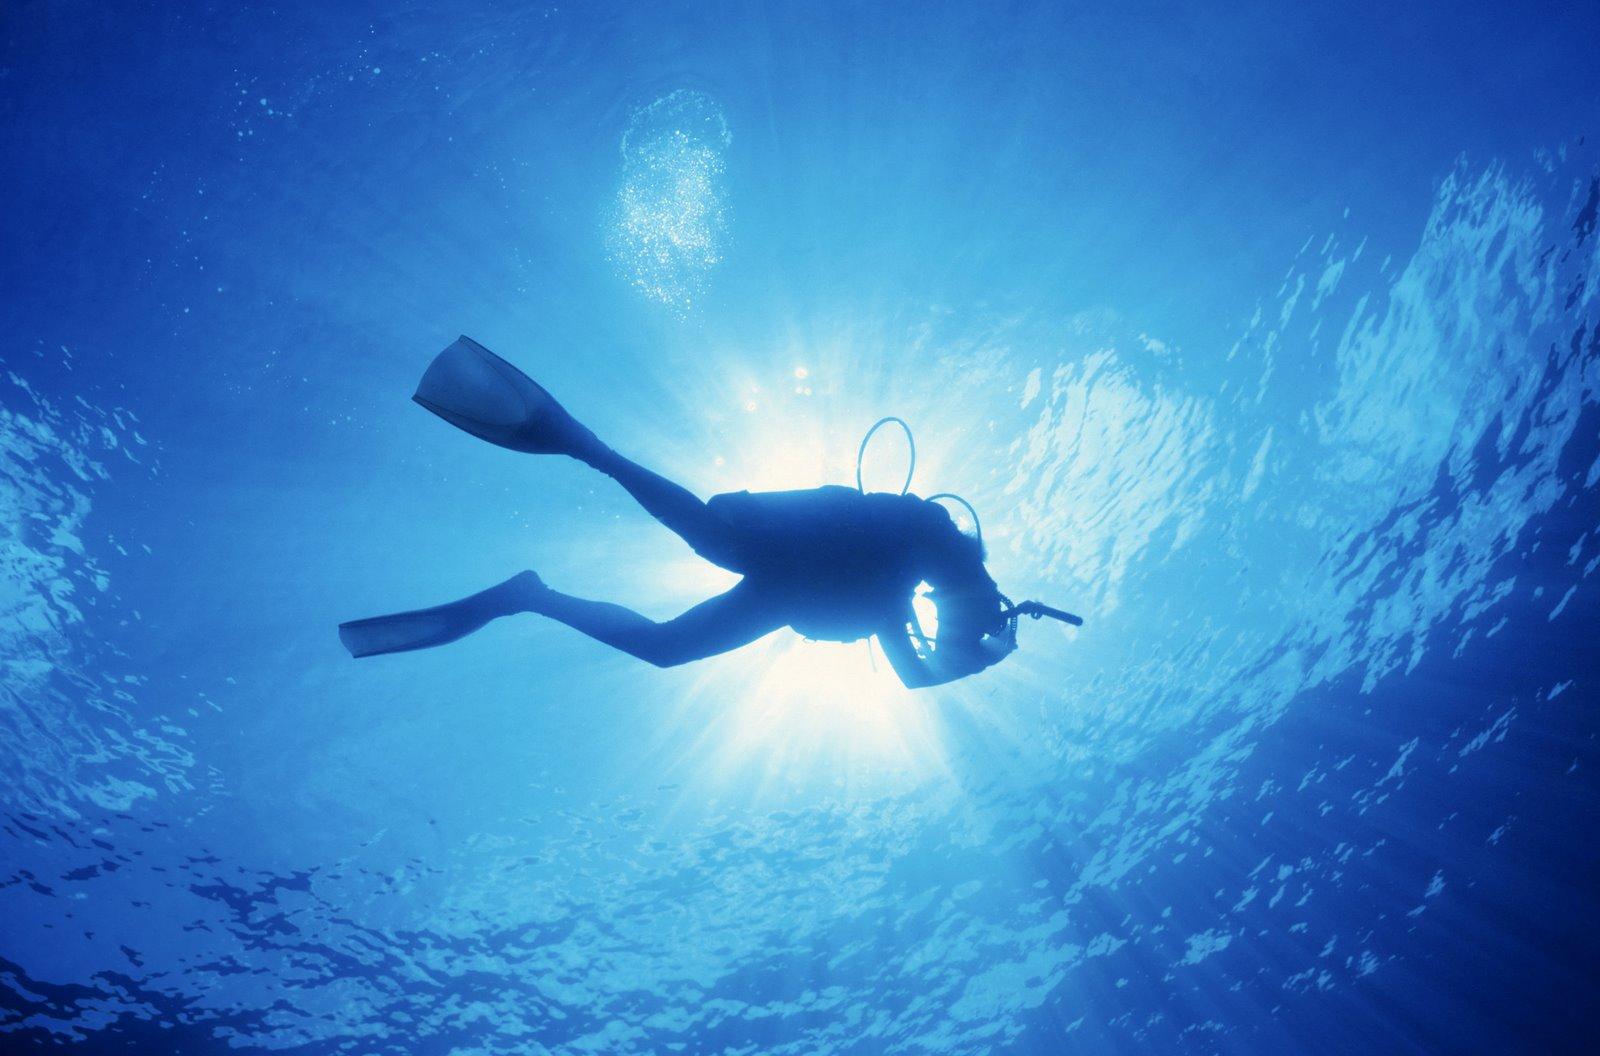 Scuba Diving Wallpaper High Resolution 1600x1056 diver underwater